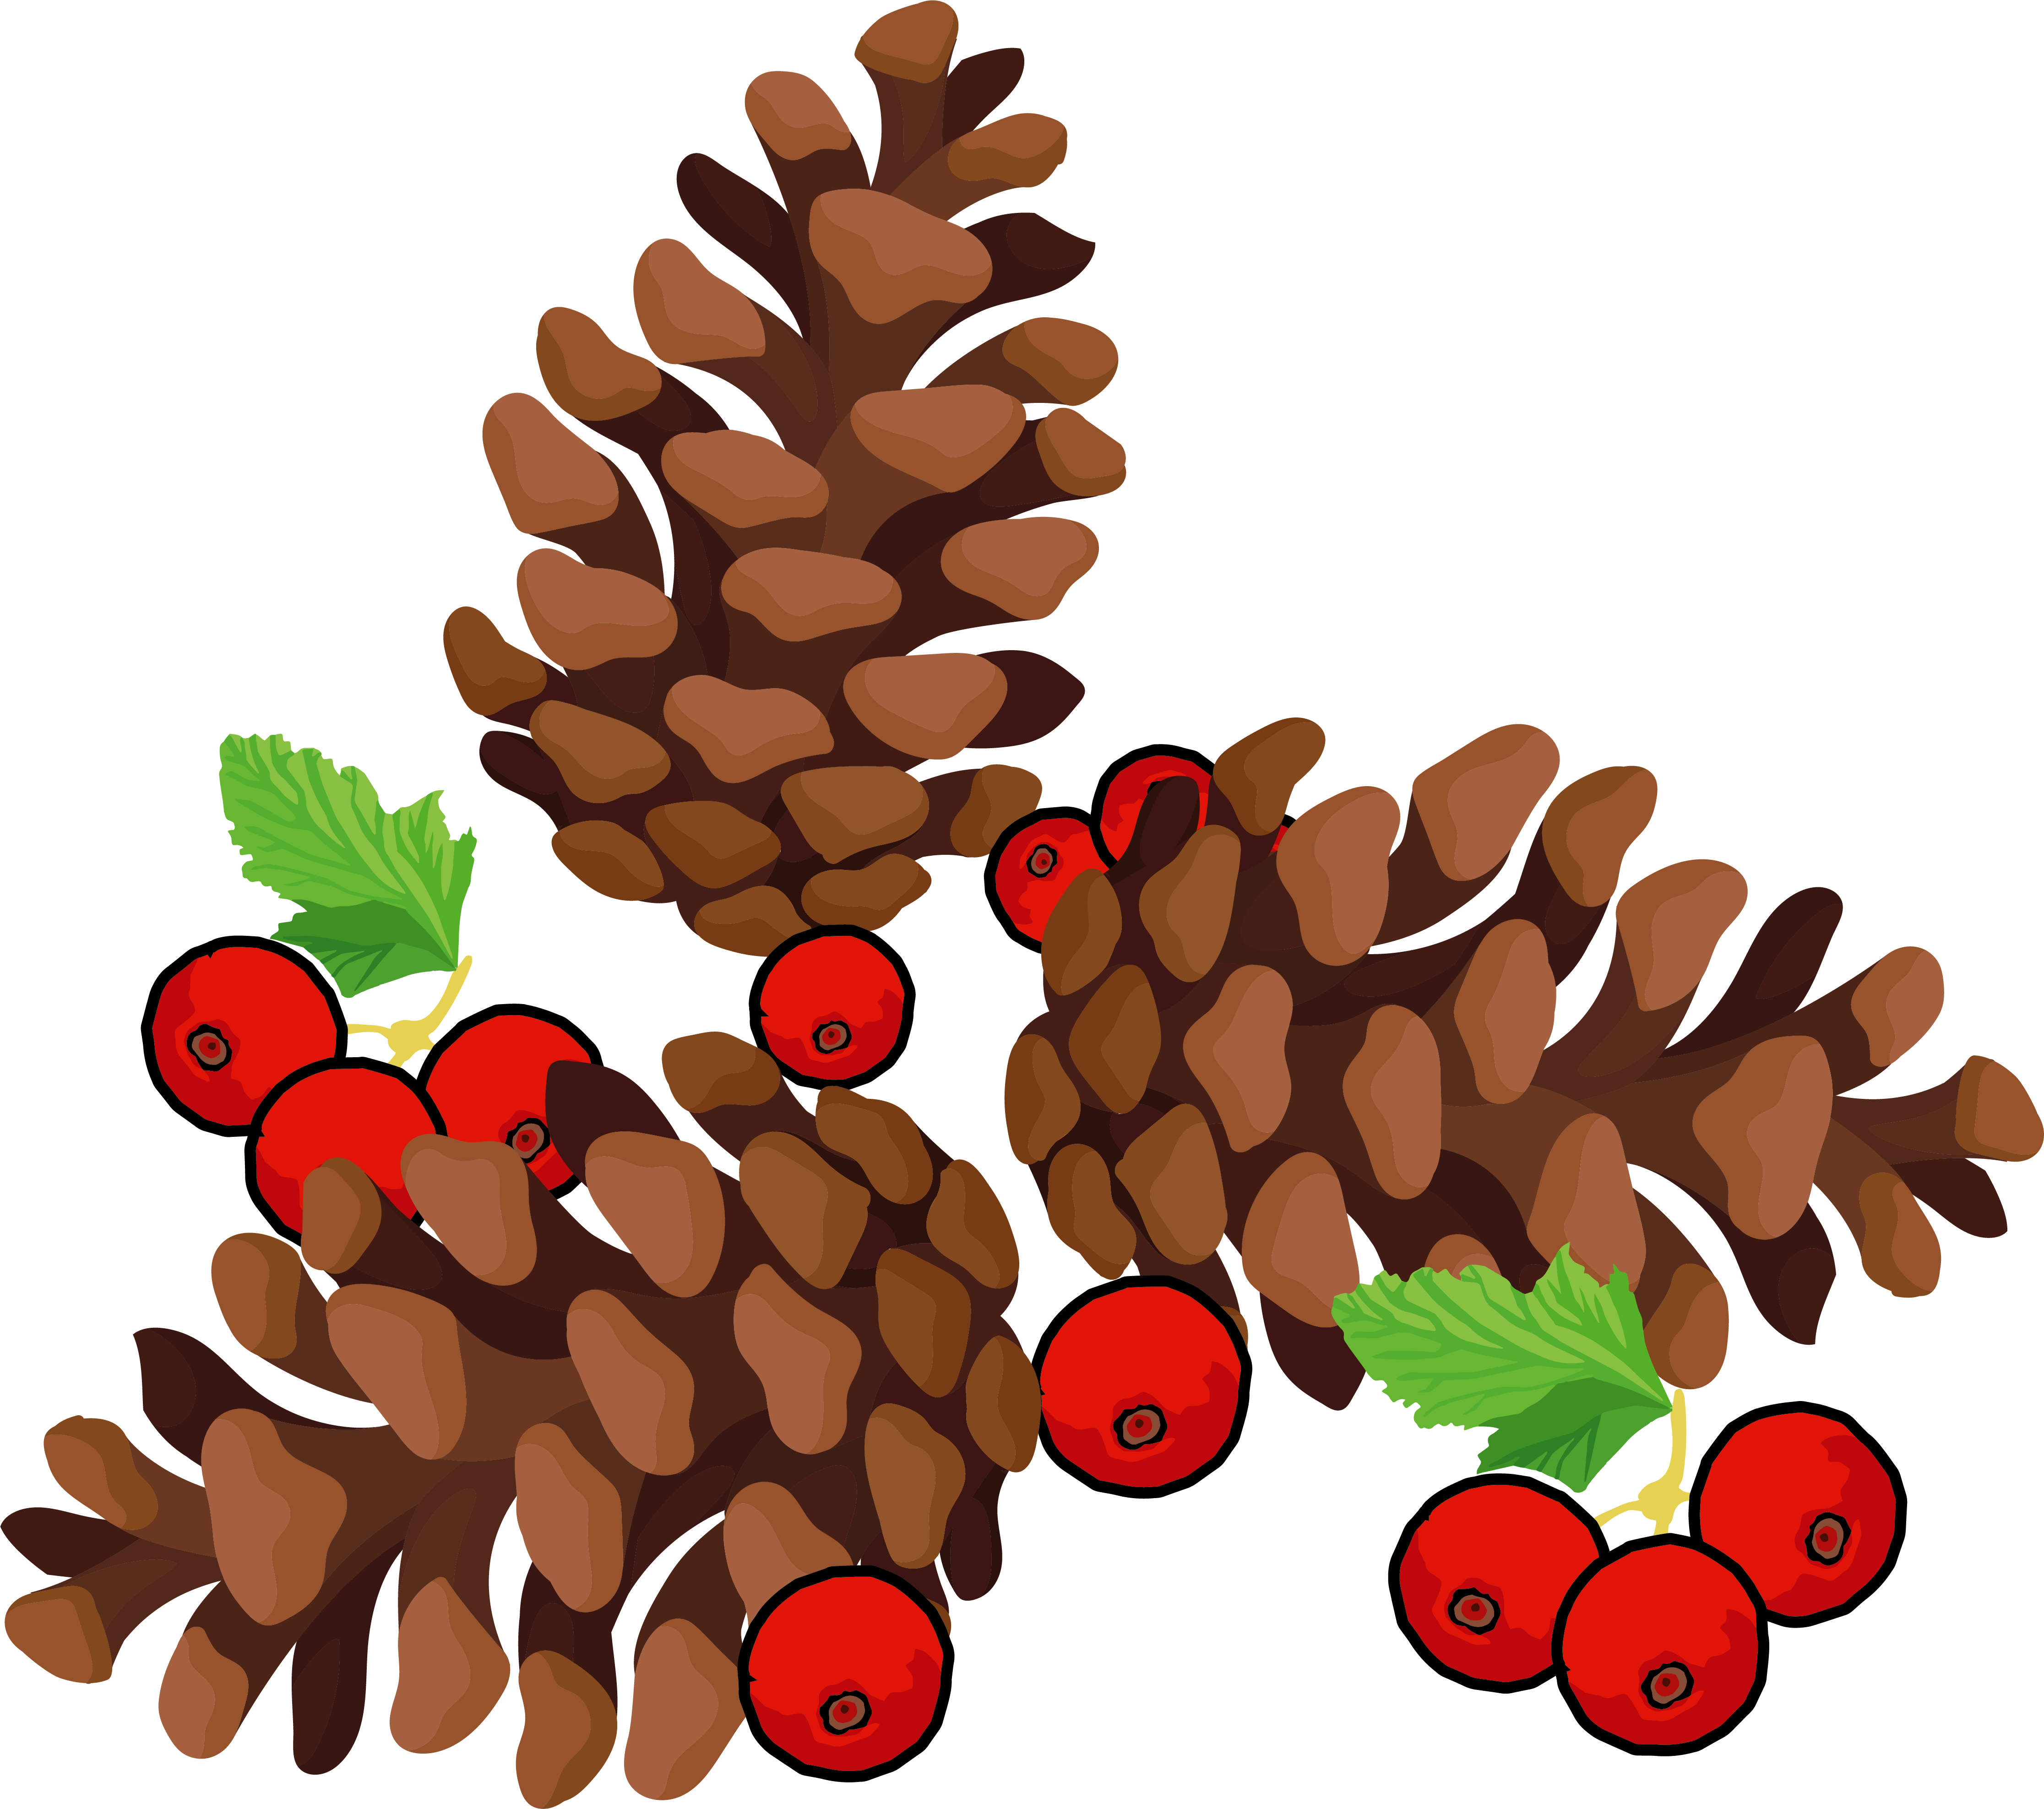 Pinecones and berries